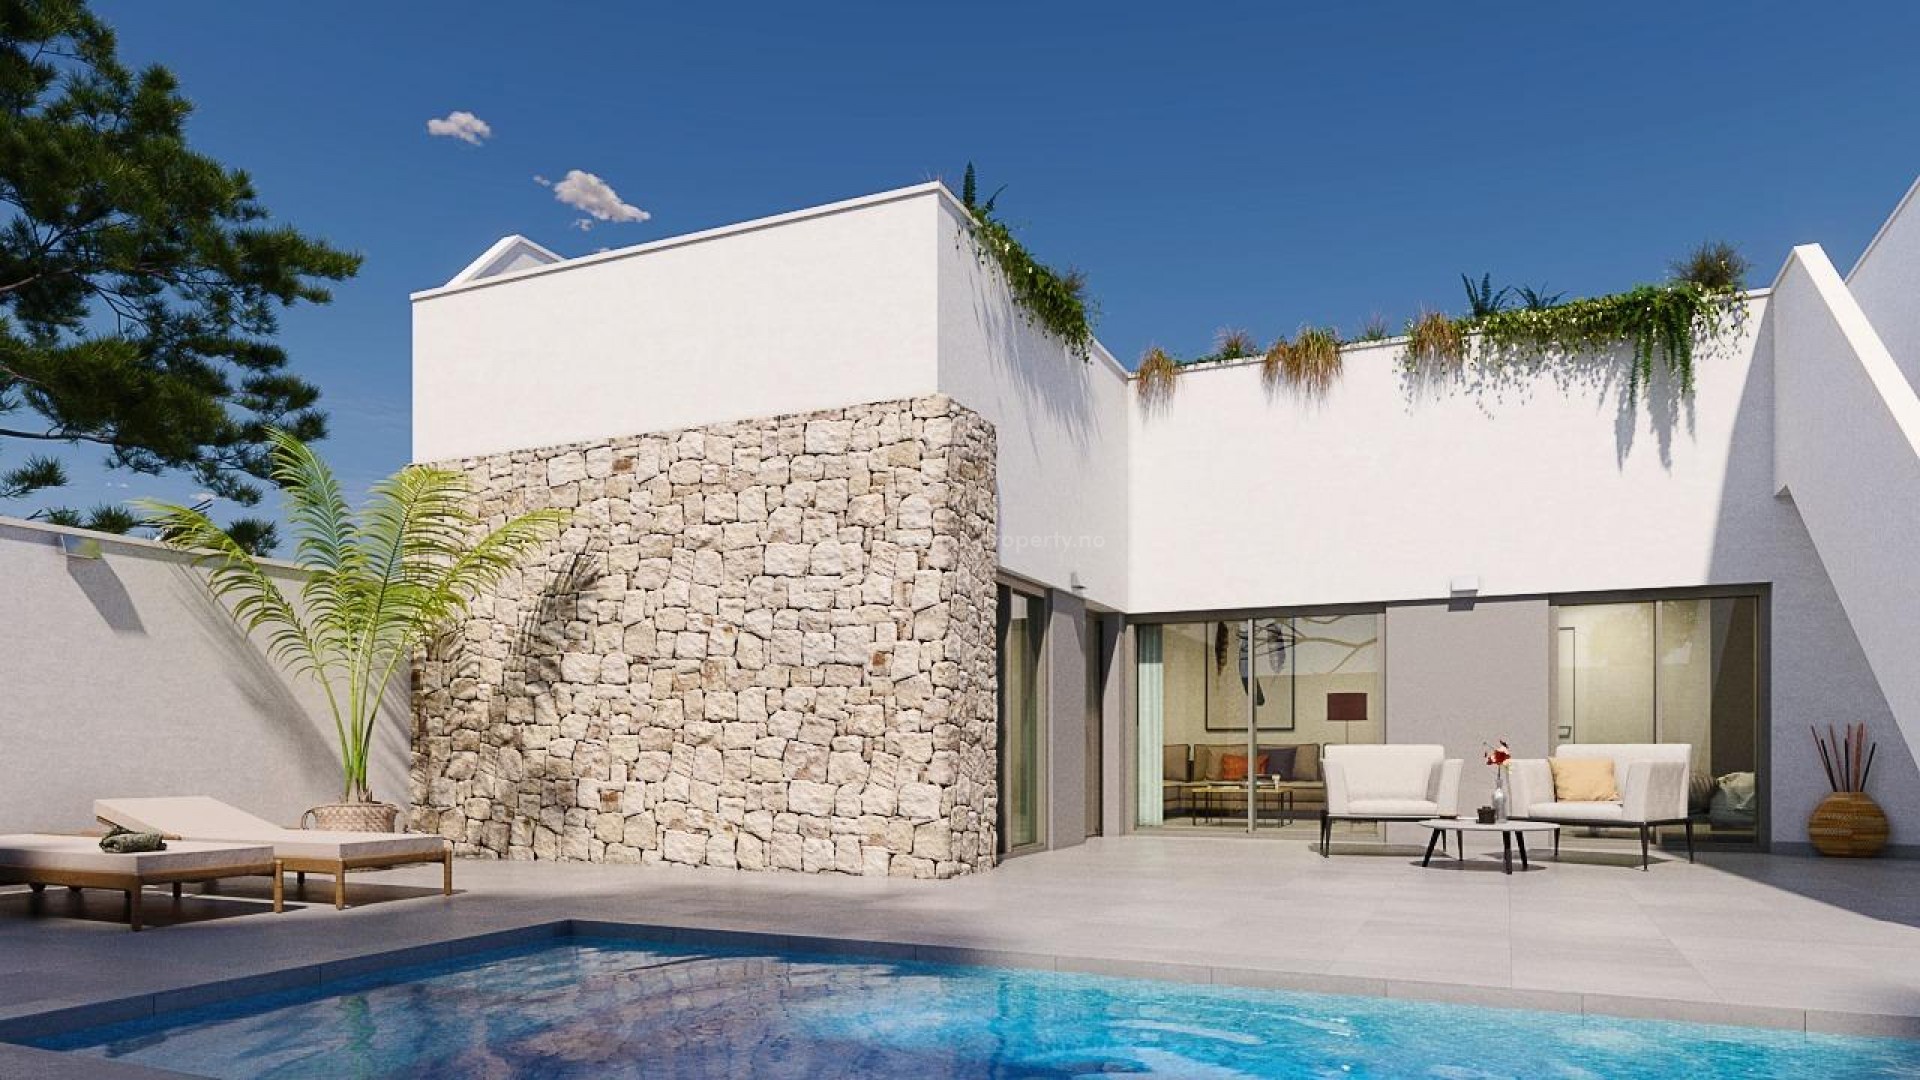 Semi-detached house in Pilar de La Horadada, 2 bedrooms, 2 bathrooms, private solarium, possibility of private swimming pool, garden with parking.